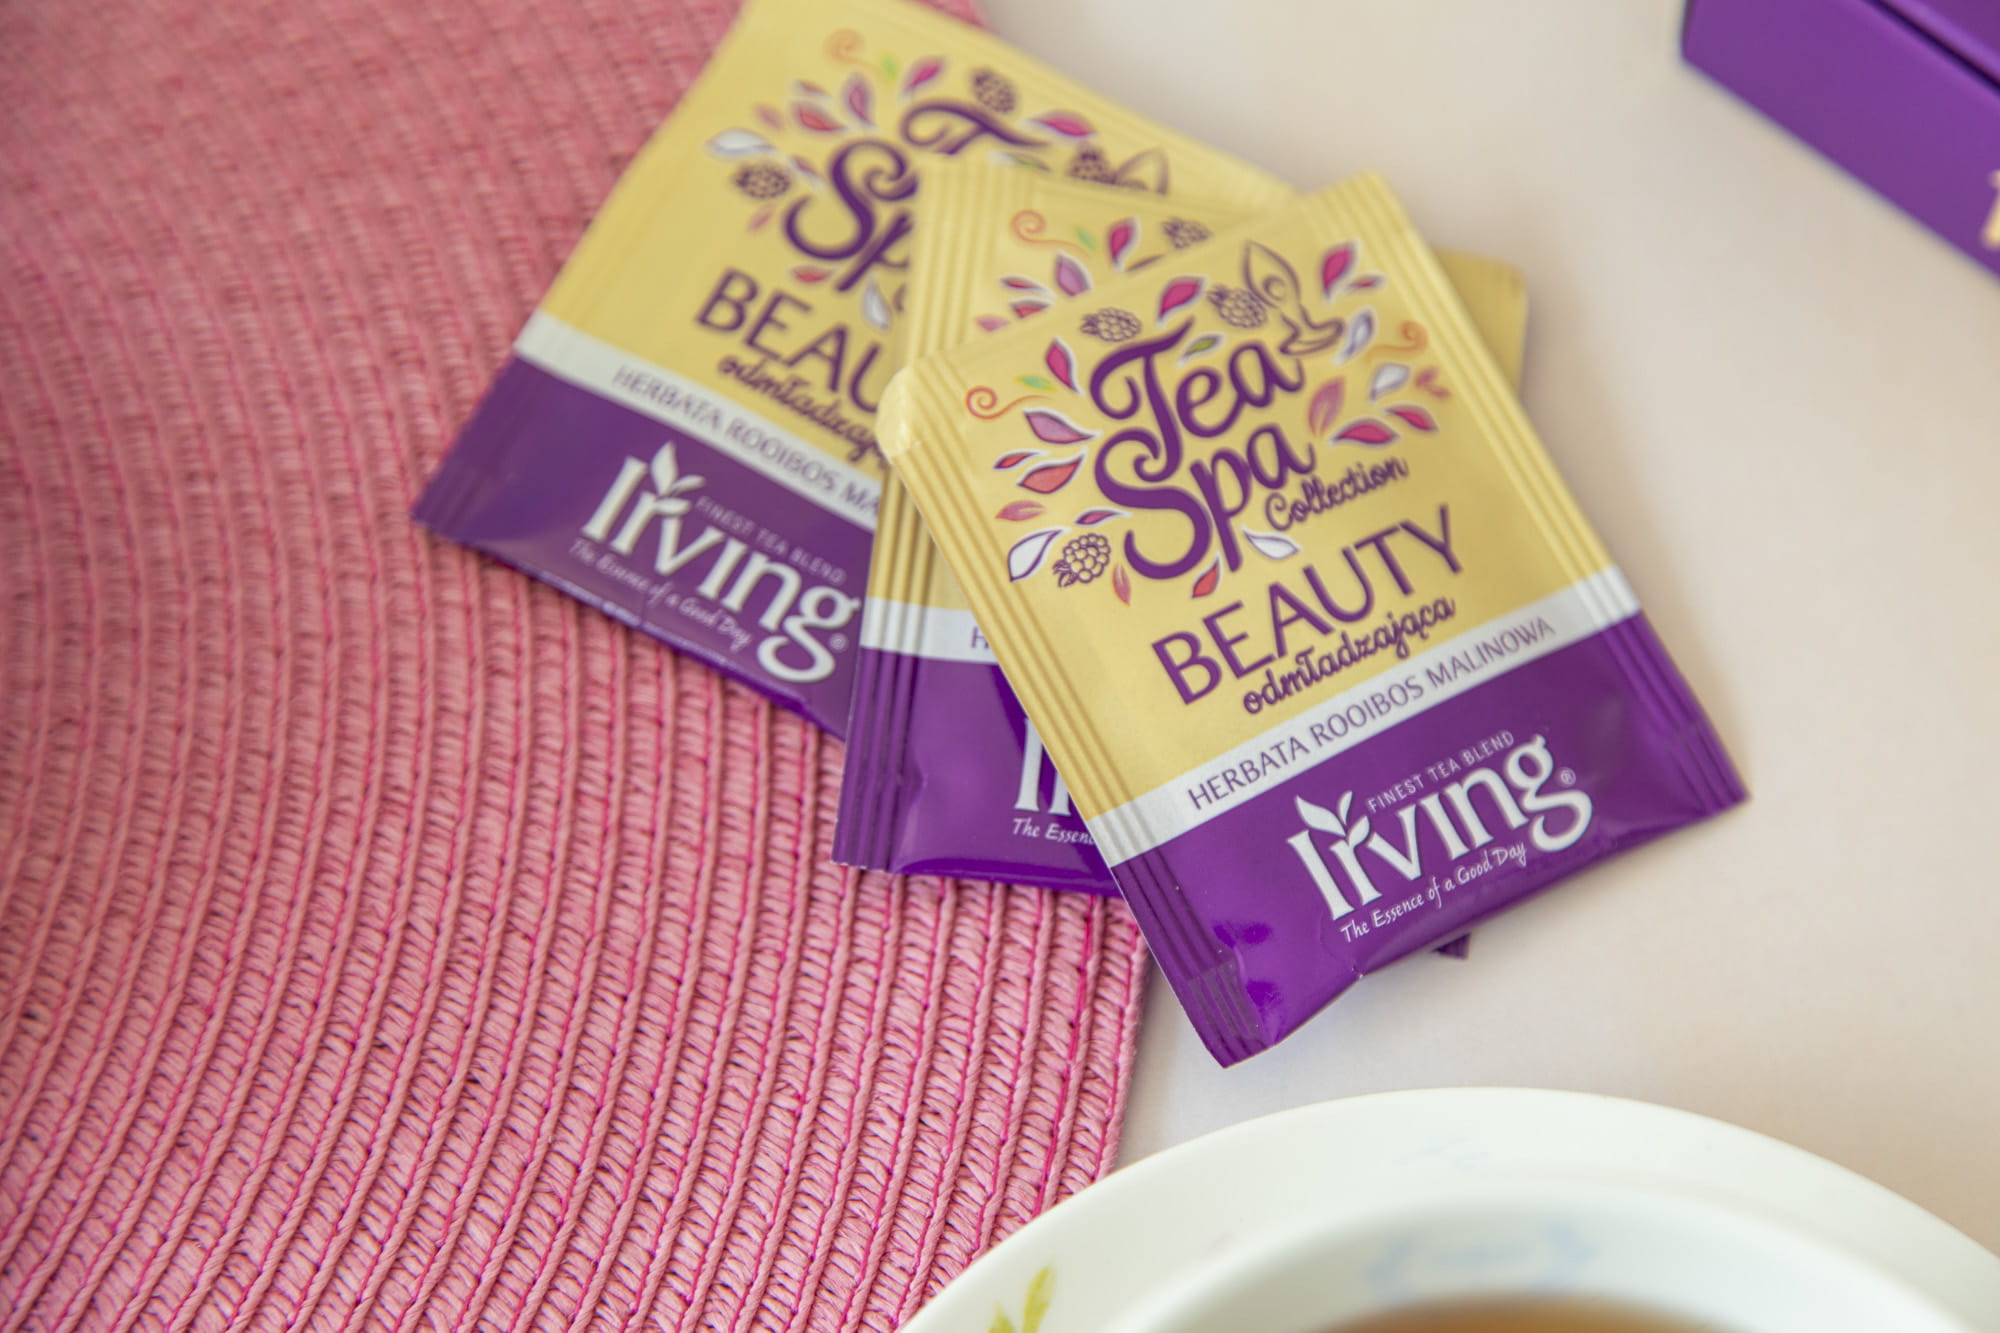 Zestaw herbat herbata Irving Tea Spa Collection 30 szt 45g